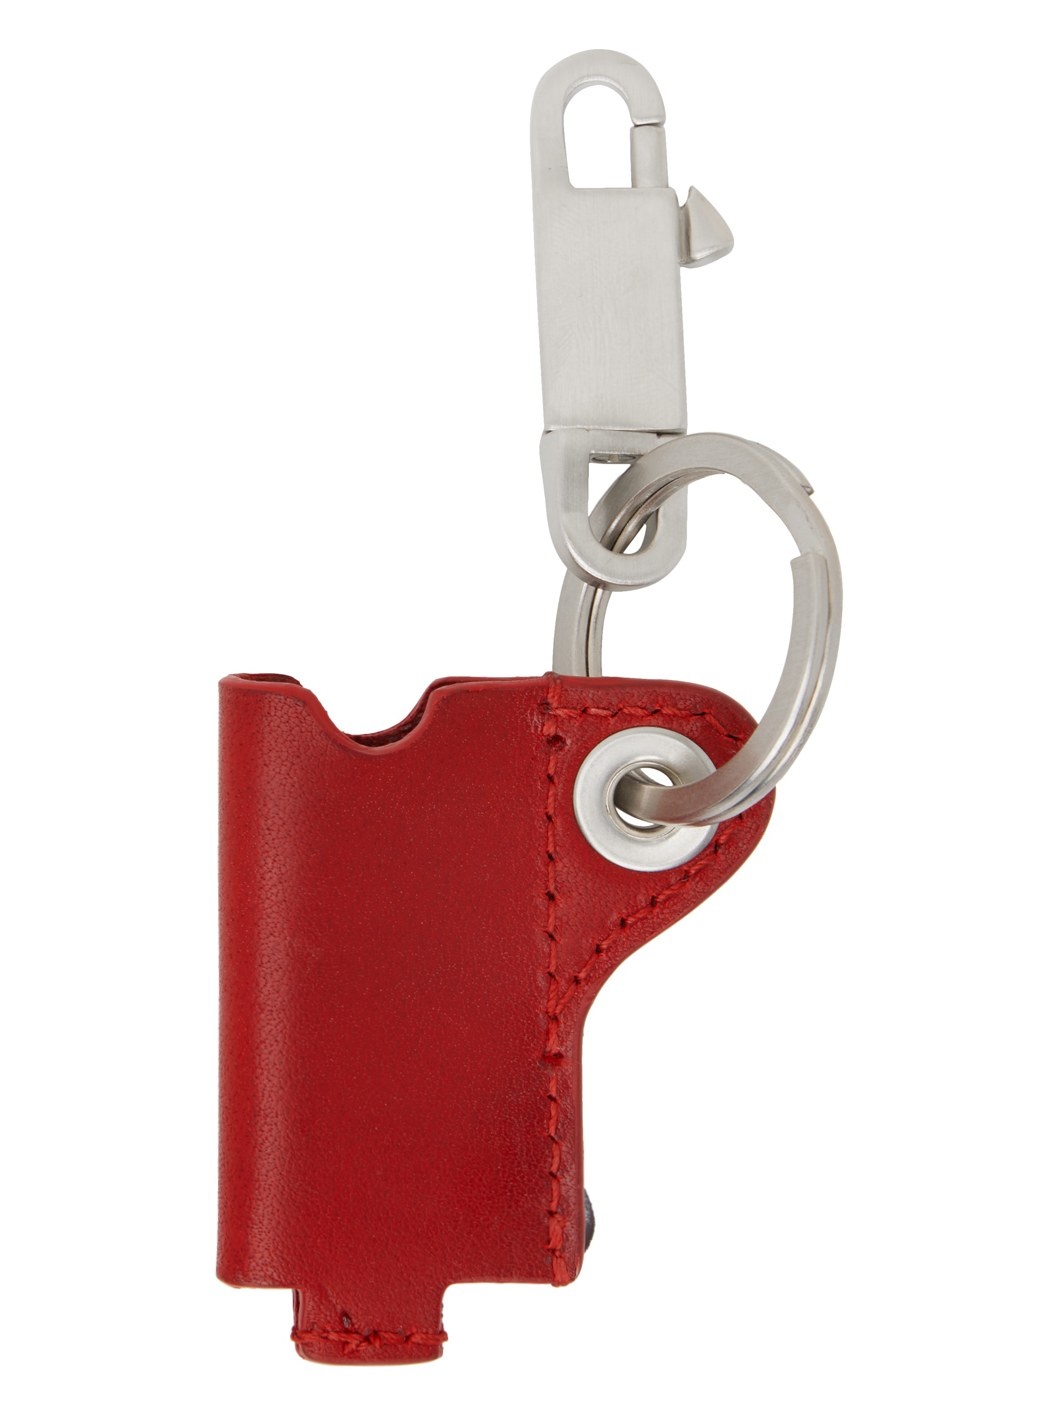 Red & Silver Mini Lighter Holder Keychain - 2